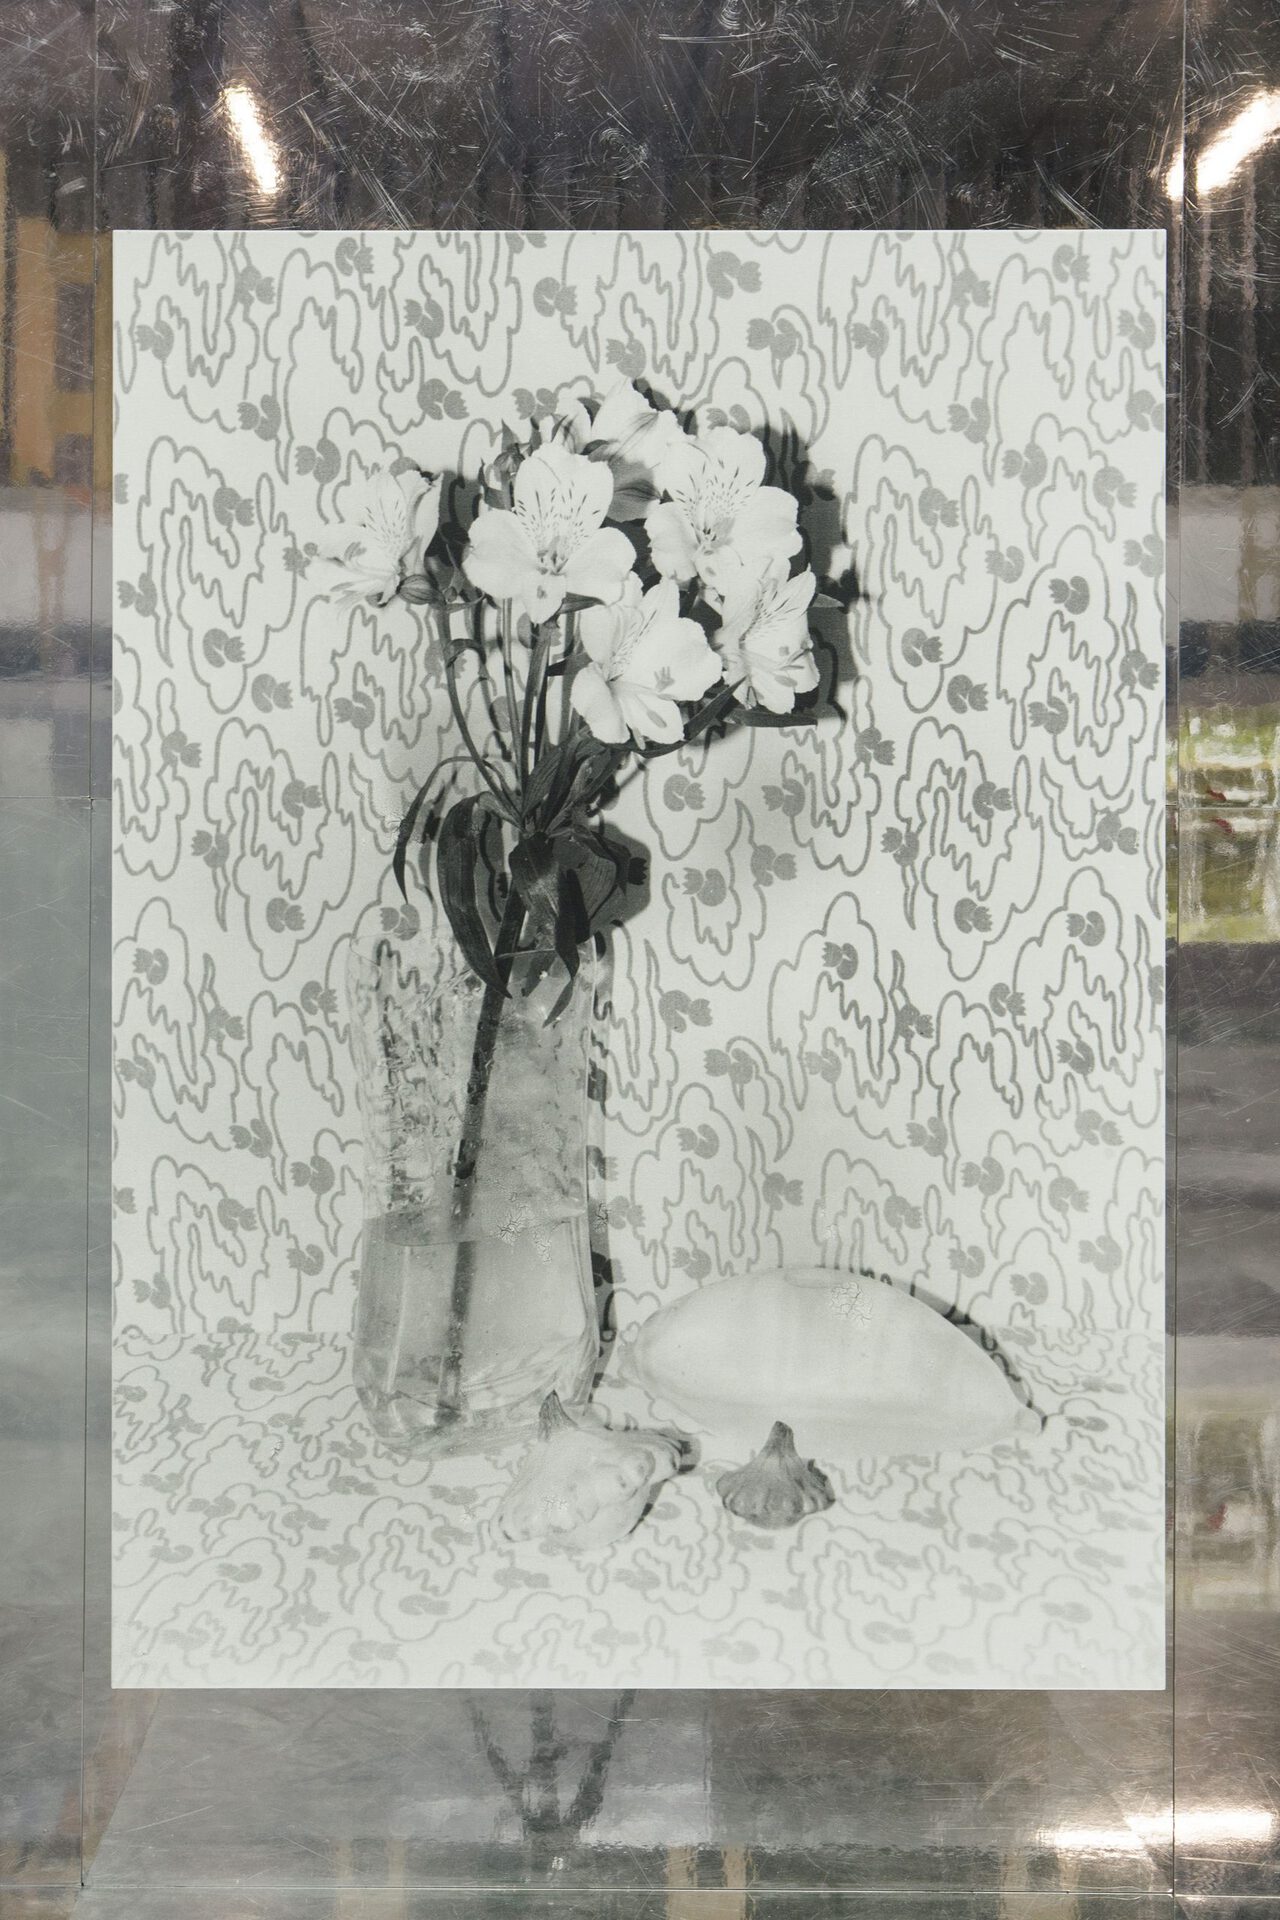 Hubert Marot, Lys et bombe à eau, 2021 silver gelatin print on linen     160 x 115 cm (62,9 x  5,2 in)